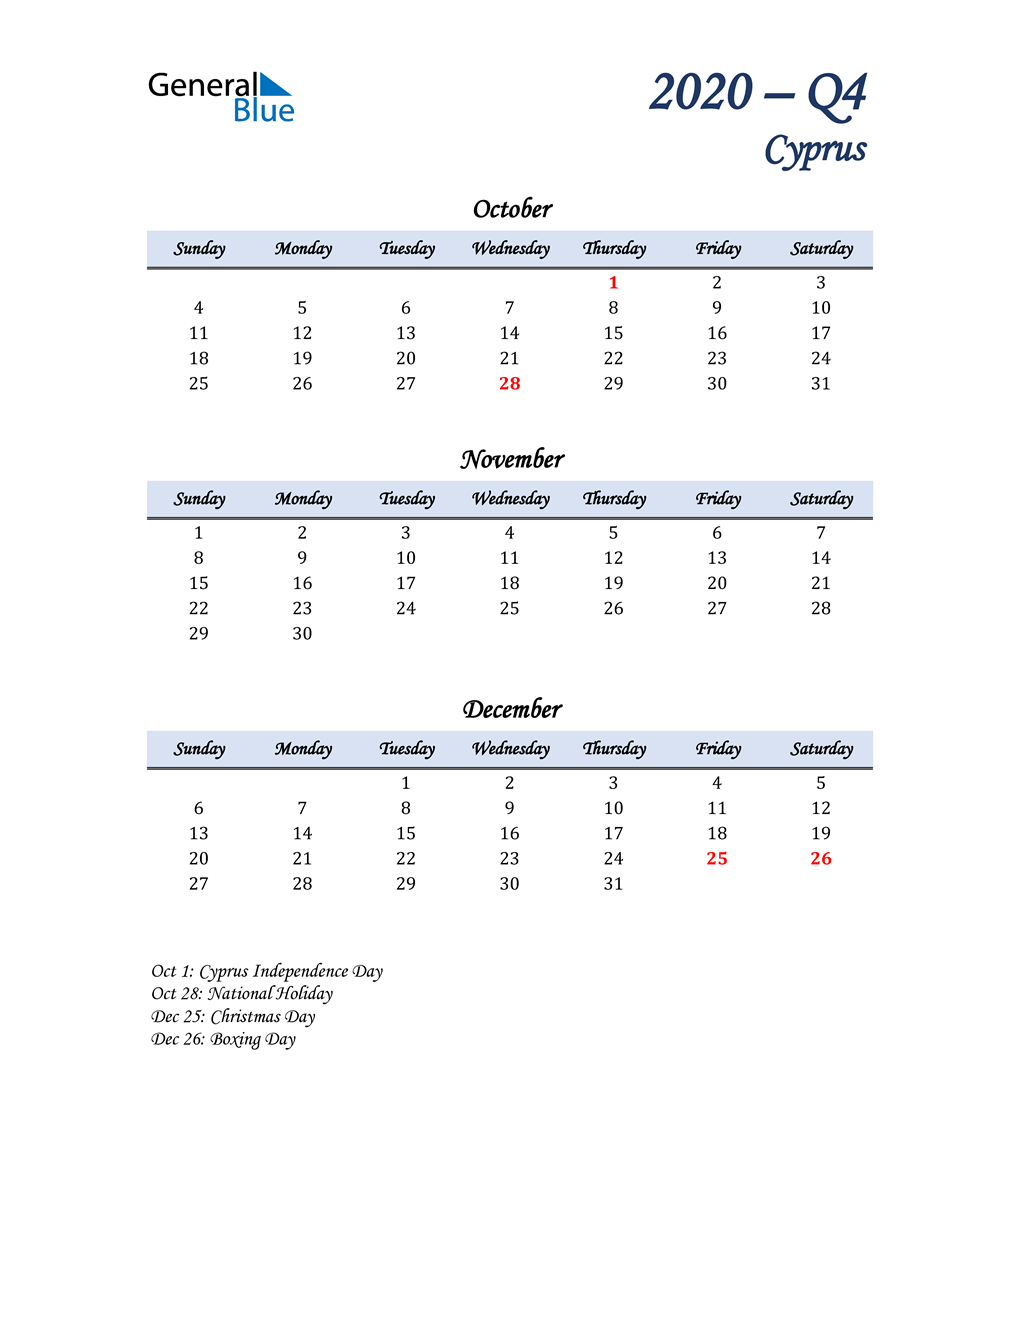  October, November, and December Calendar for Cyprus